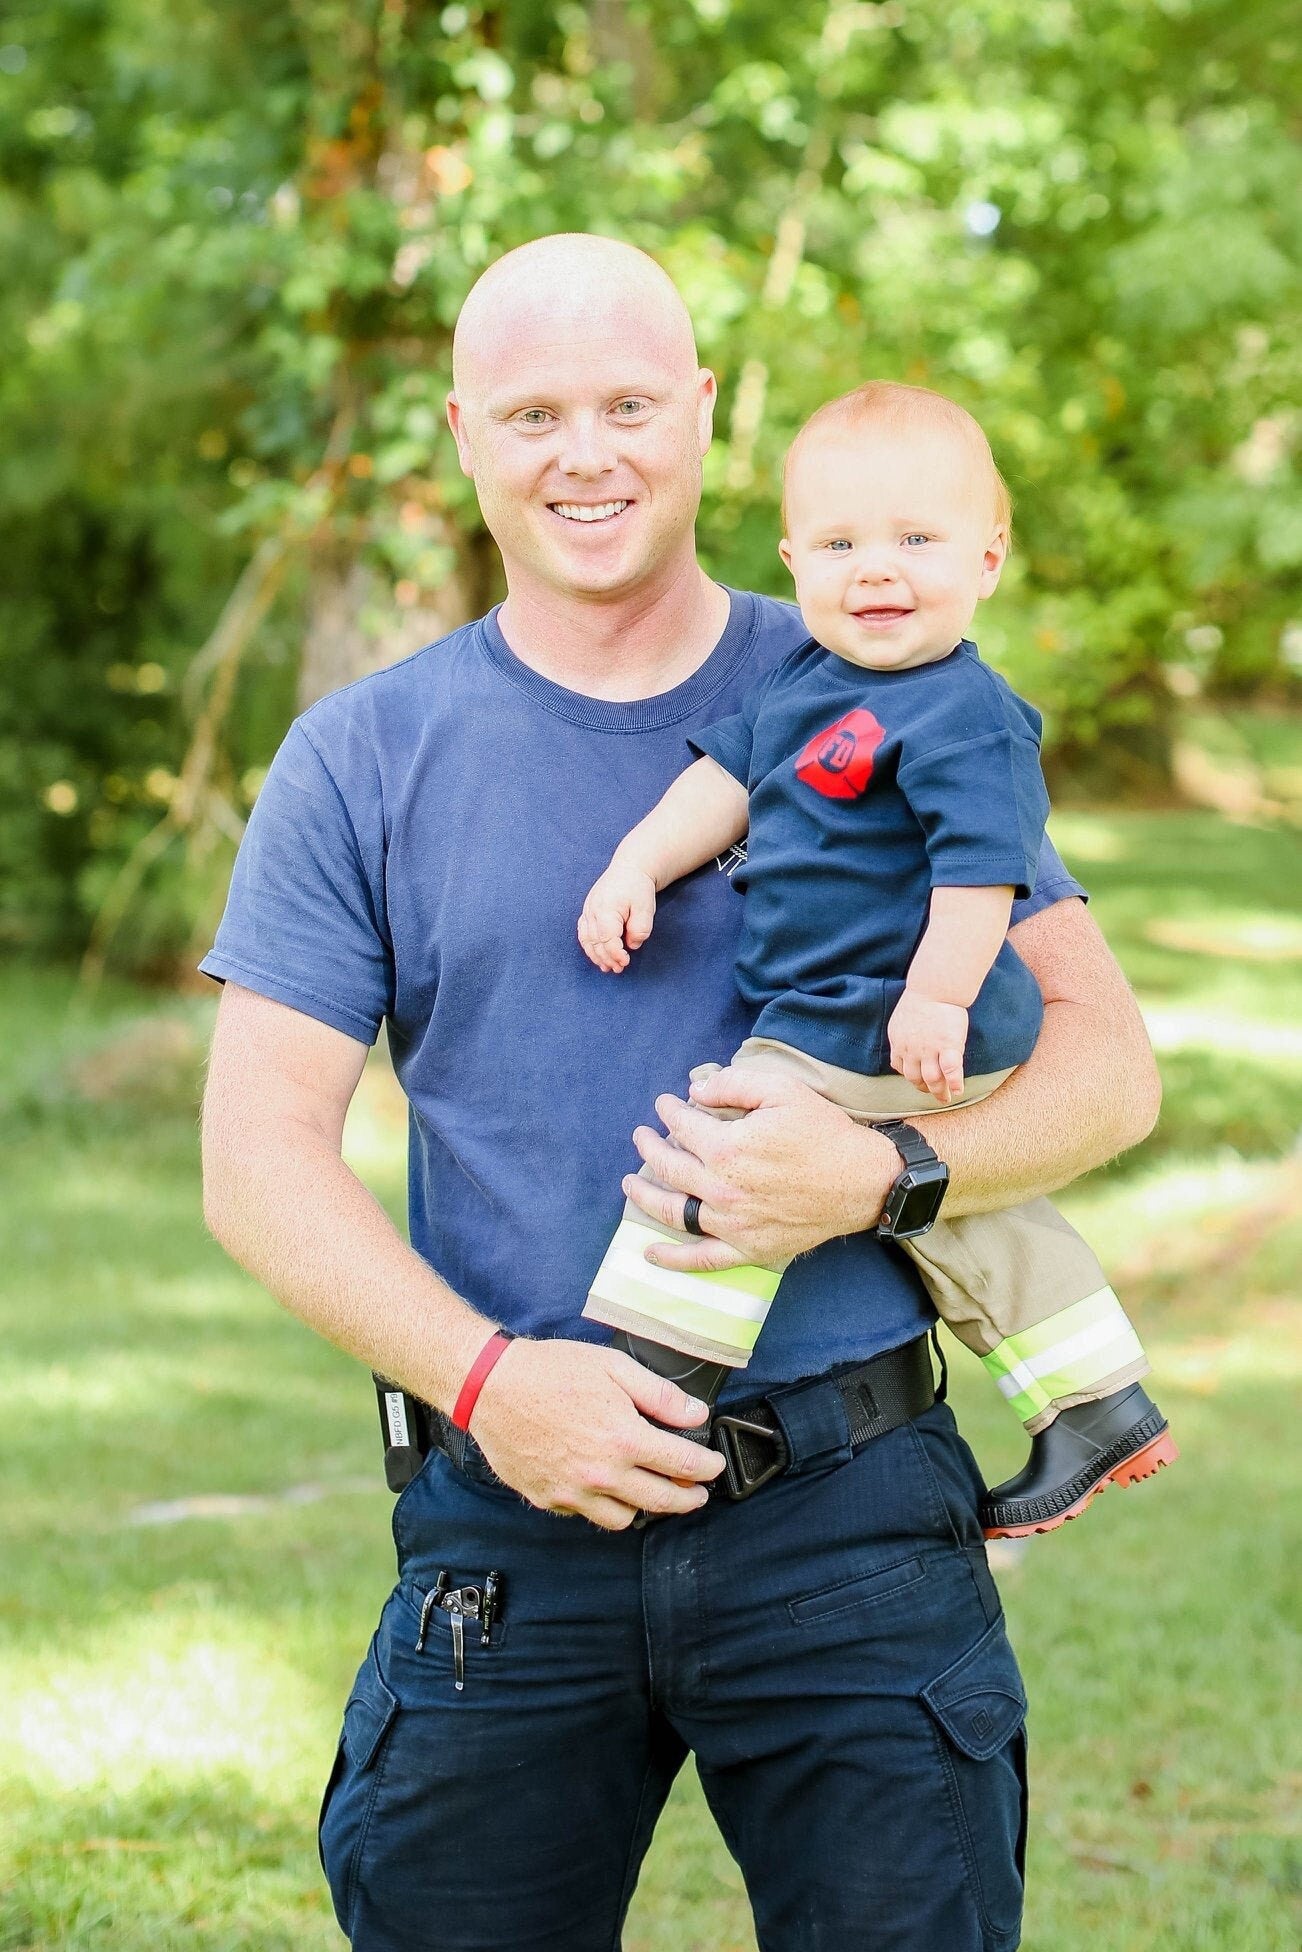 baby wearing blue shirt with maltese cross firefighter shirt 